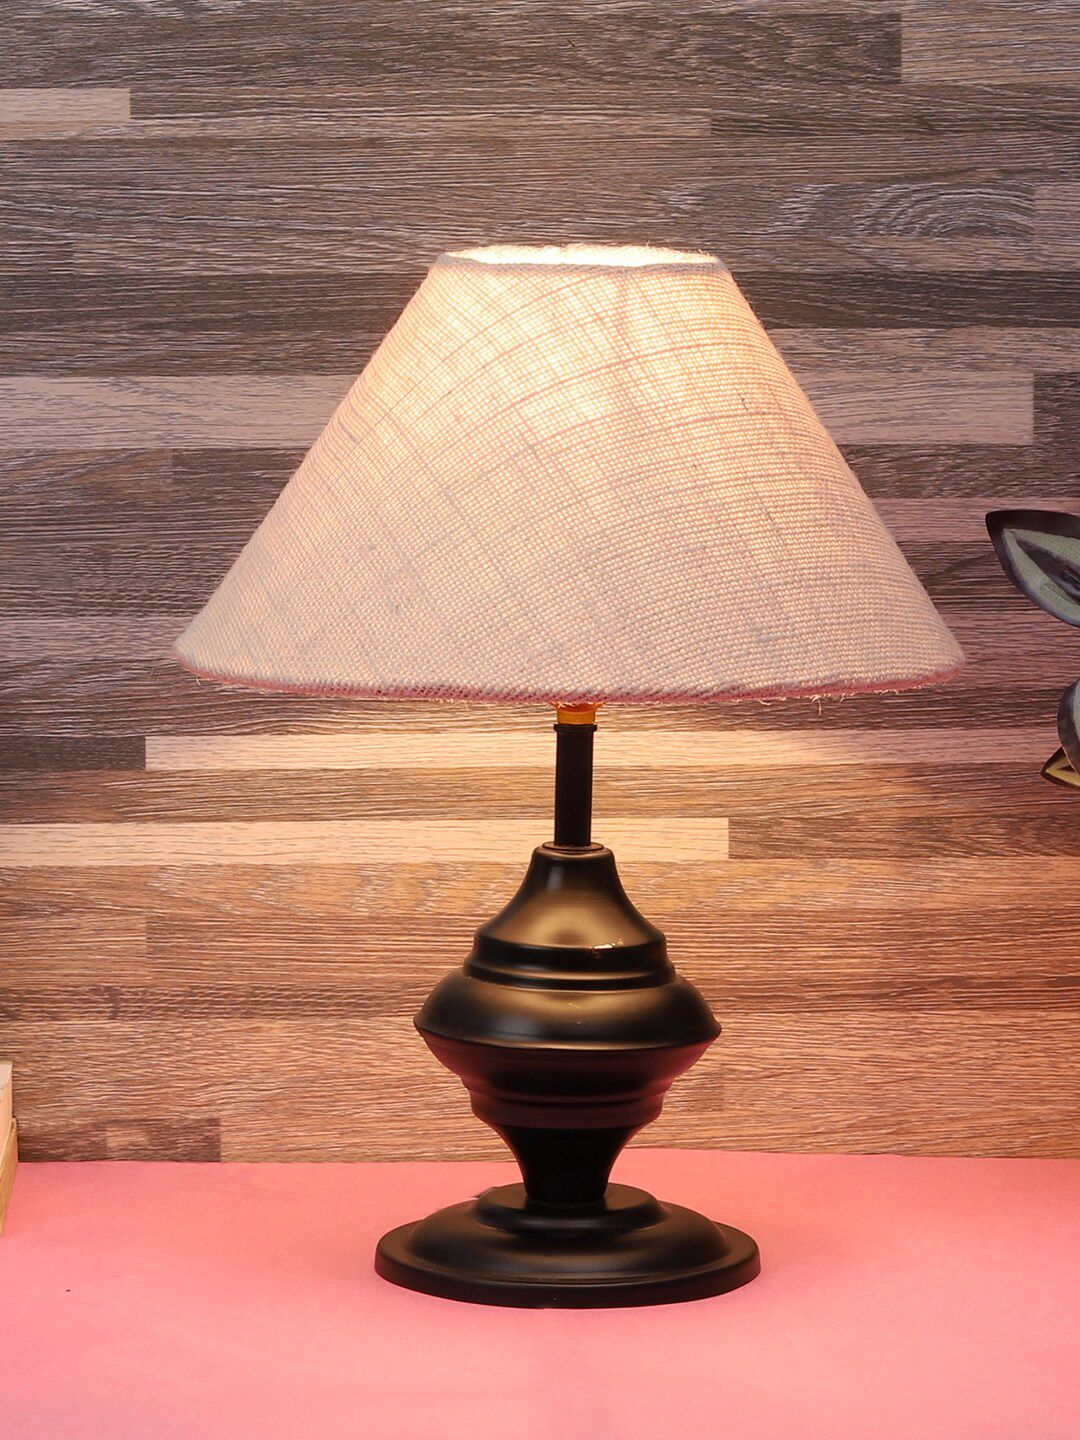 foziq Black Solid Table Lamps Price in India